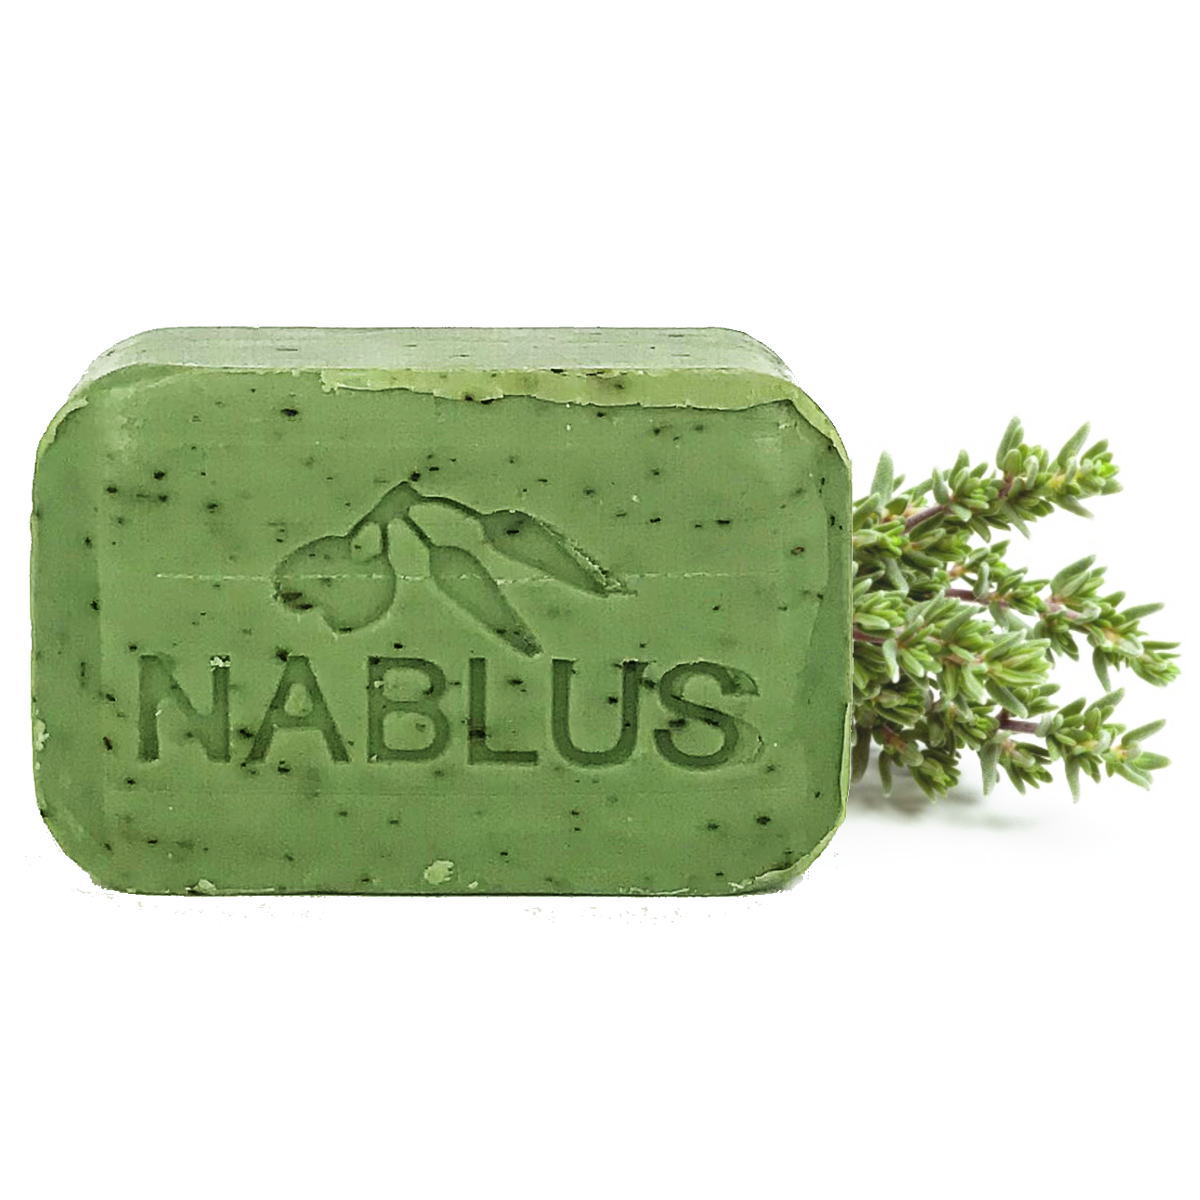 Nablus Soap ナーブルスソープ – タイム – 無添加 オーガニック石鹸